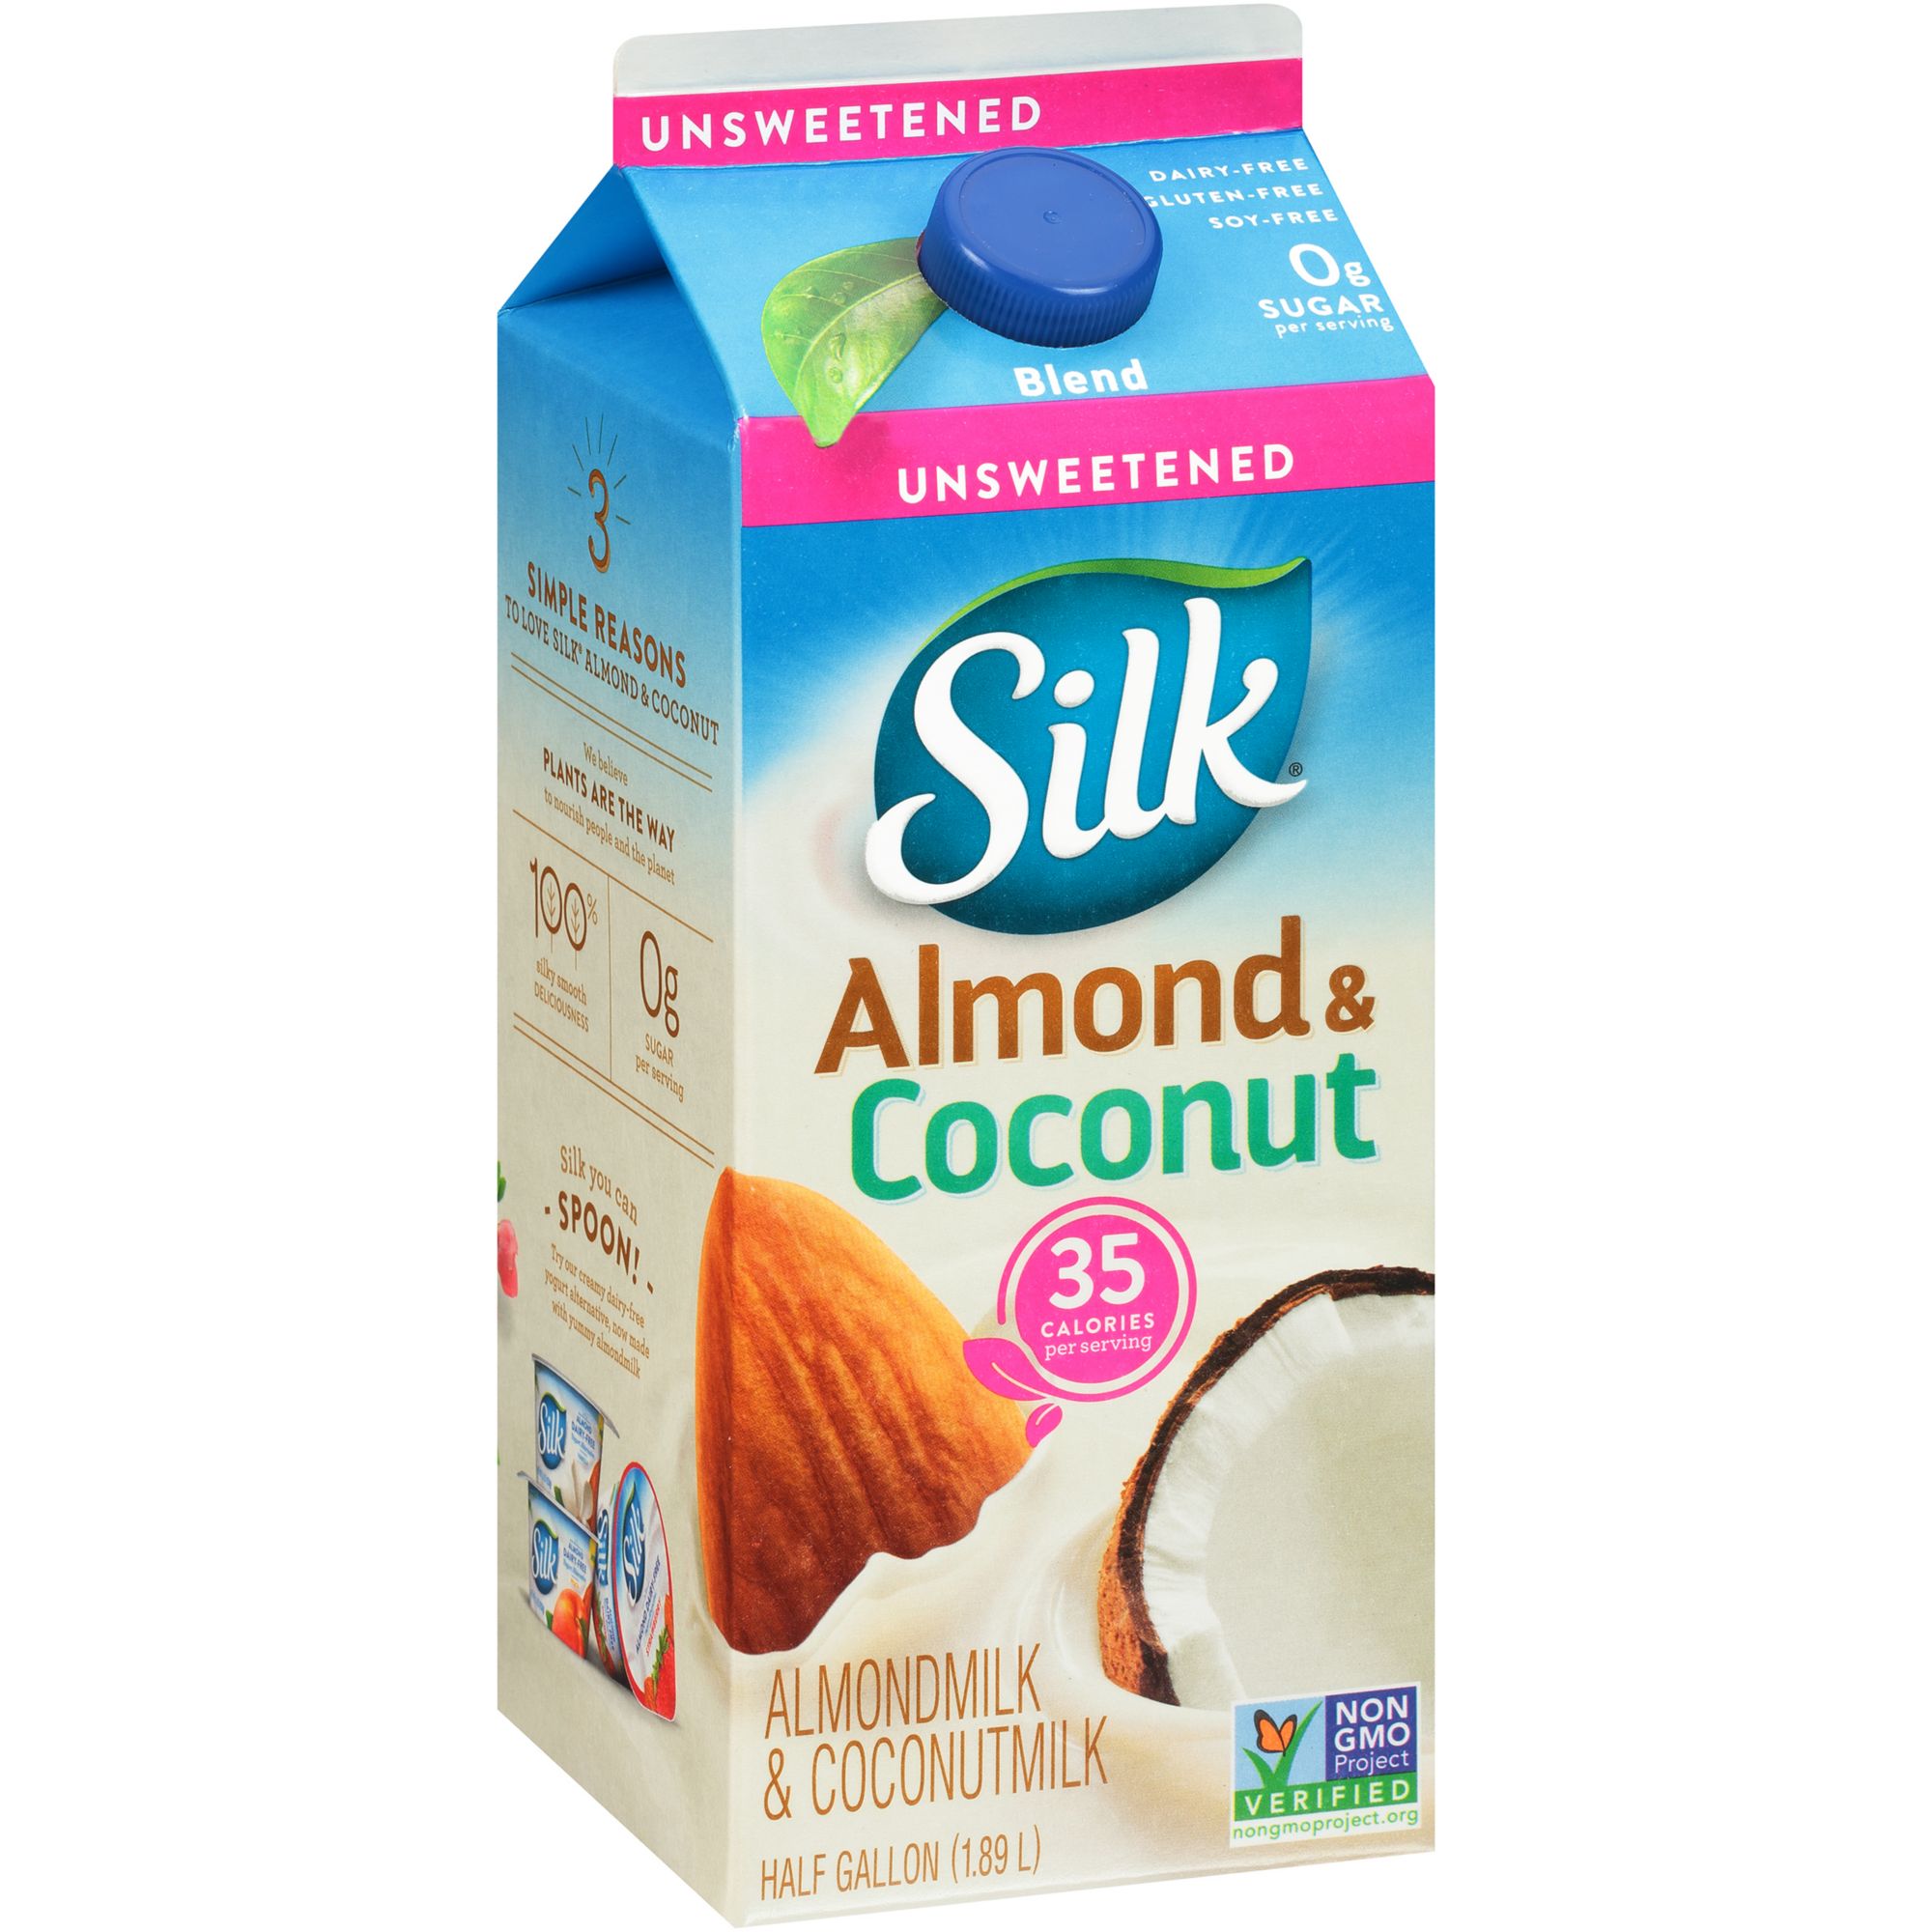 silk coconut milk unsweetened